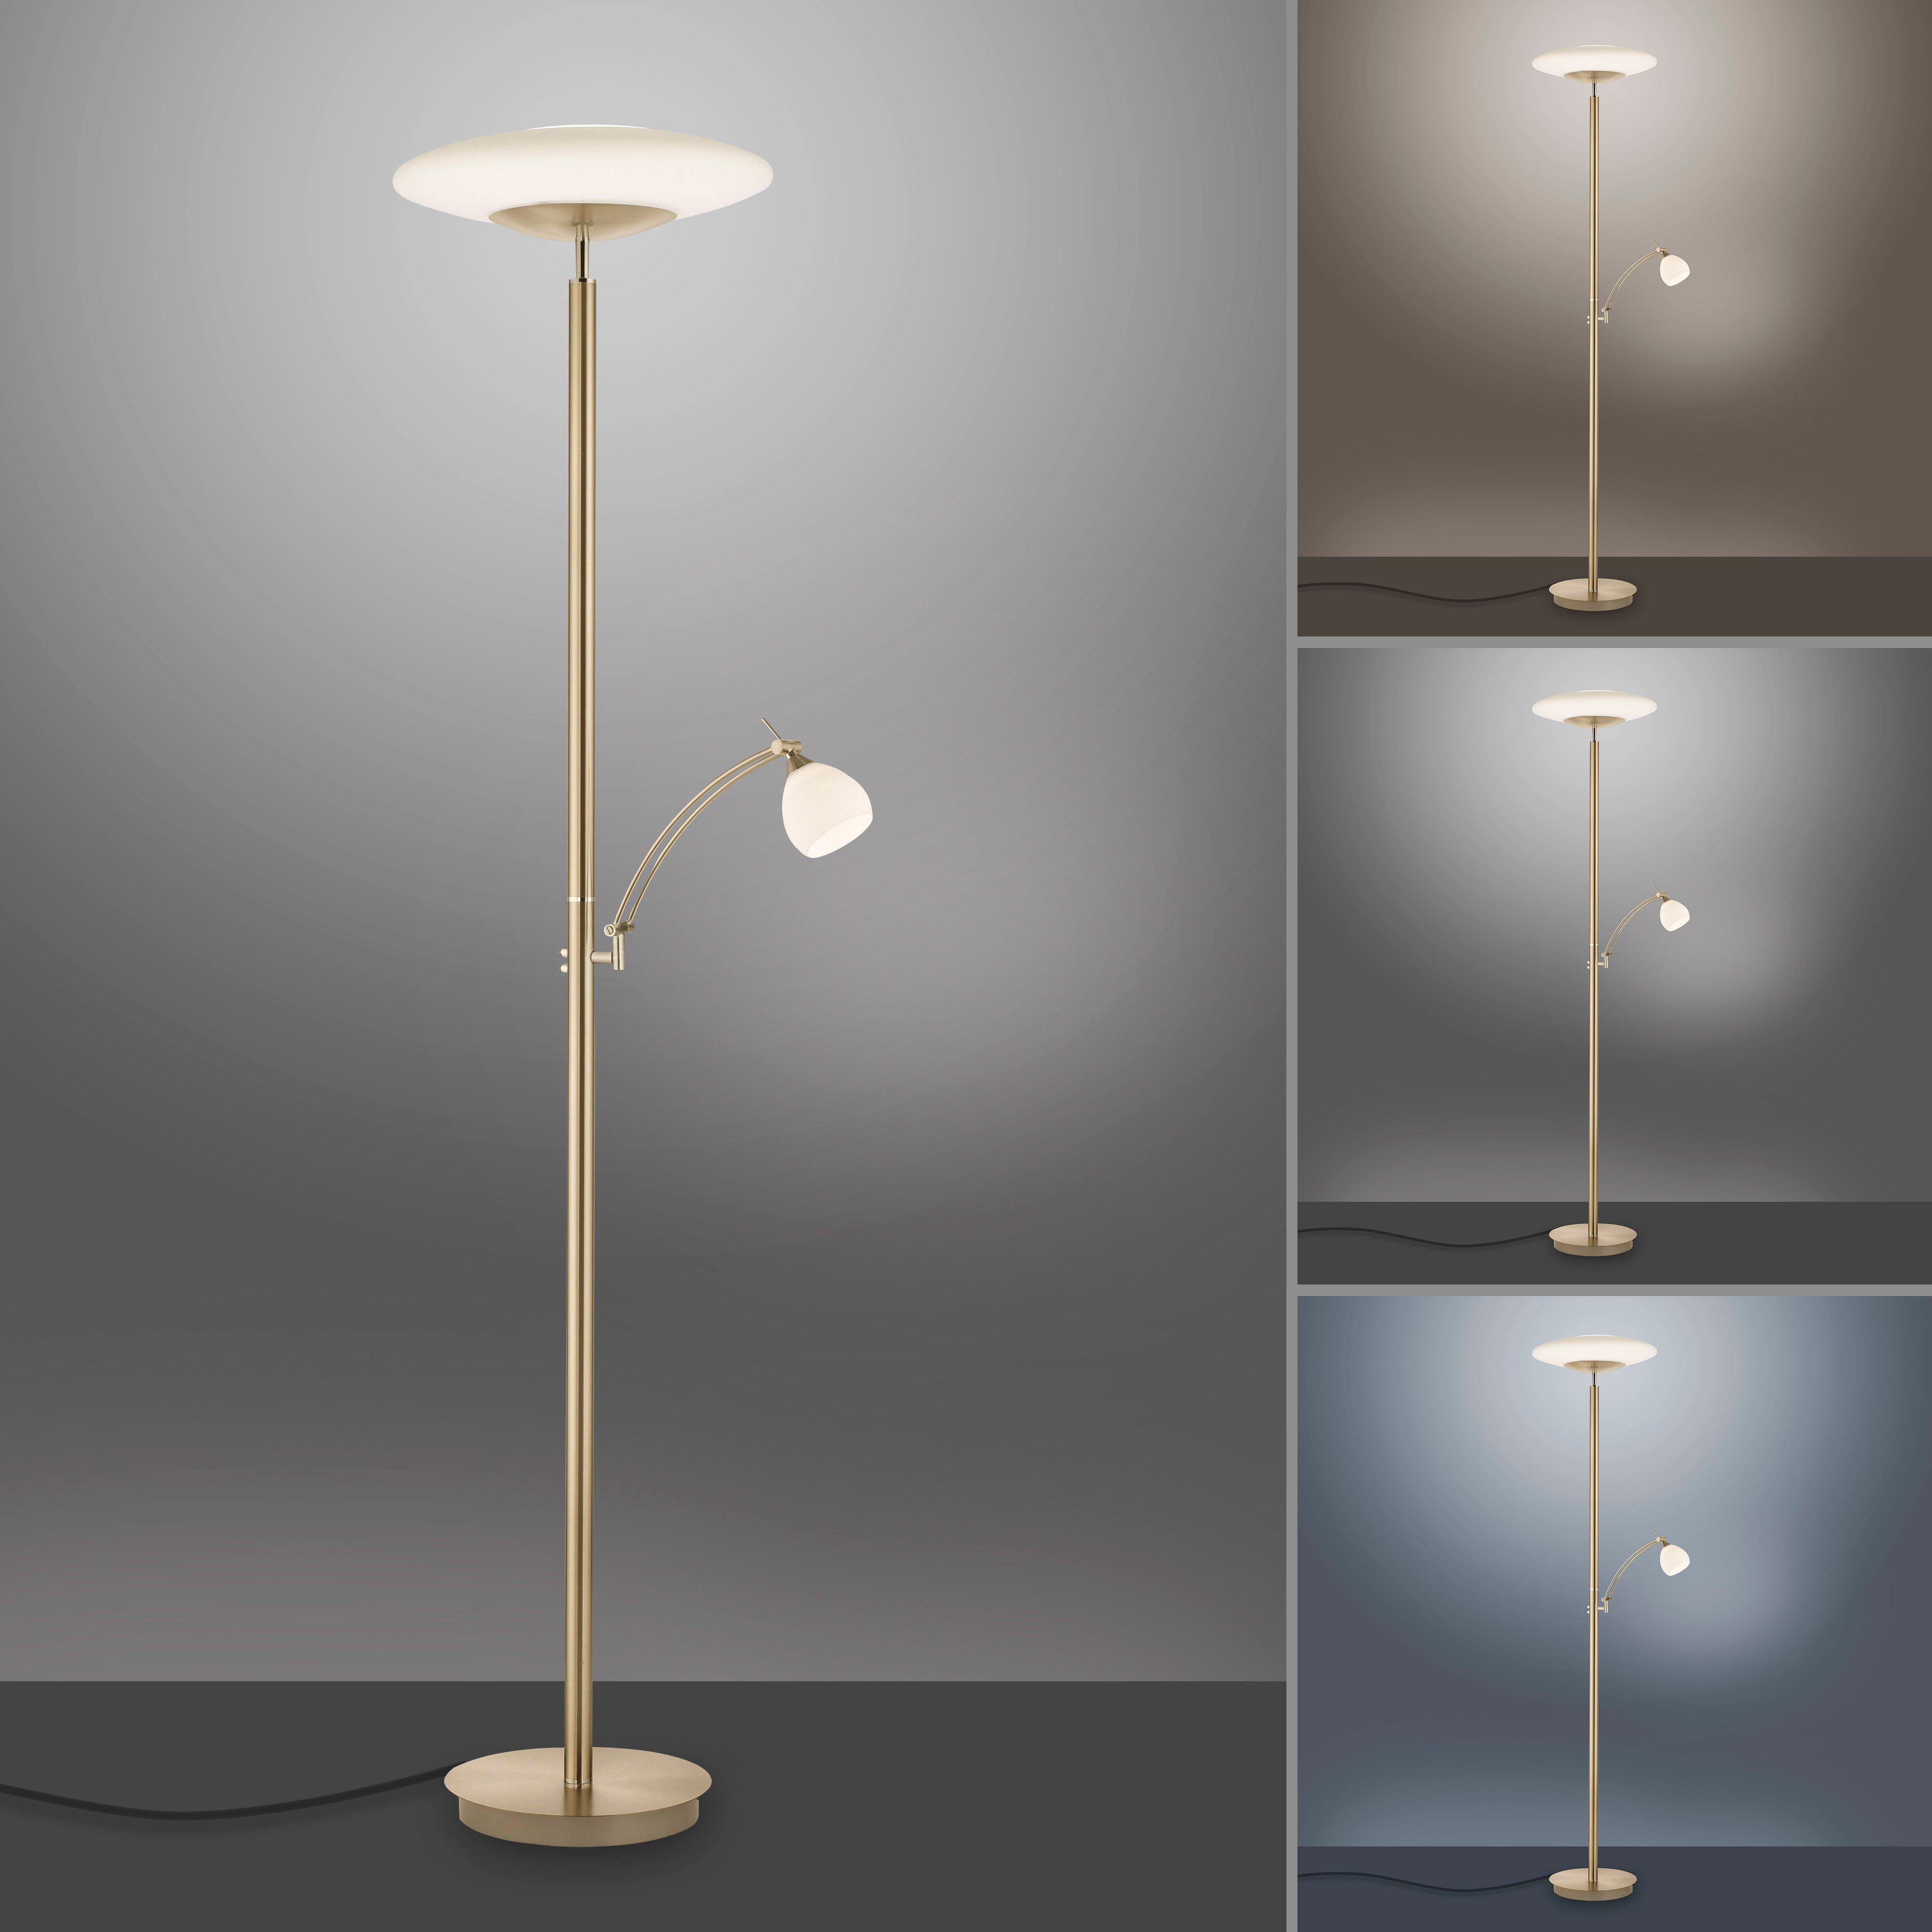 Paul Neuhaus Stehlampe über warmweiß fest tunable white, TROJA, kaltweiß, dimmbar Tastdimmer, - LED - integriert, CCT Memory LED